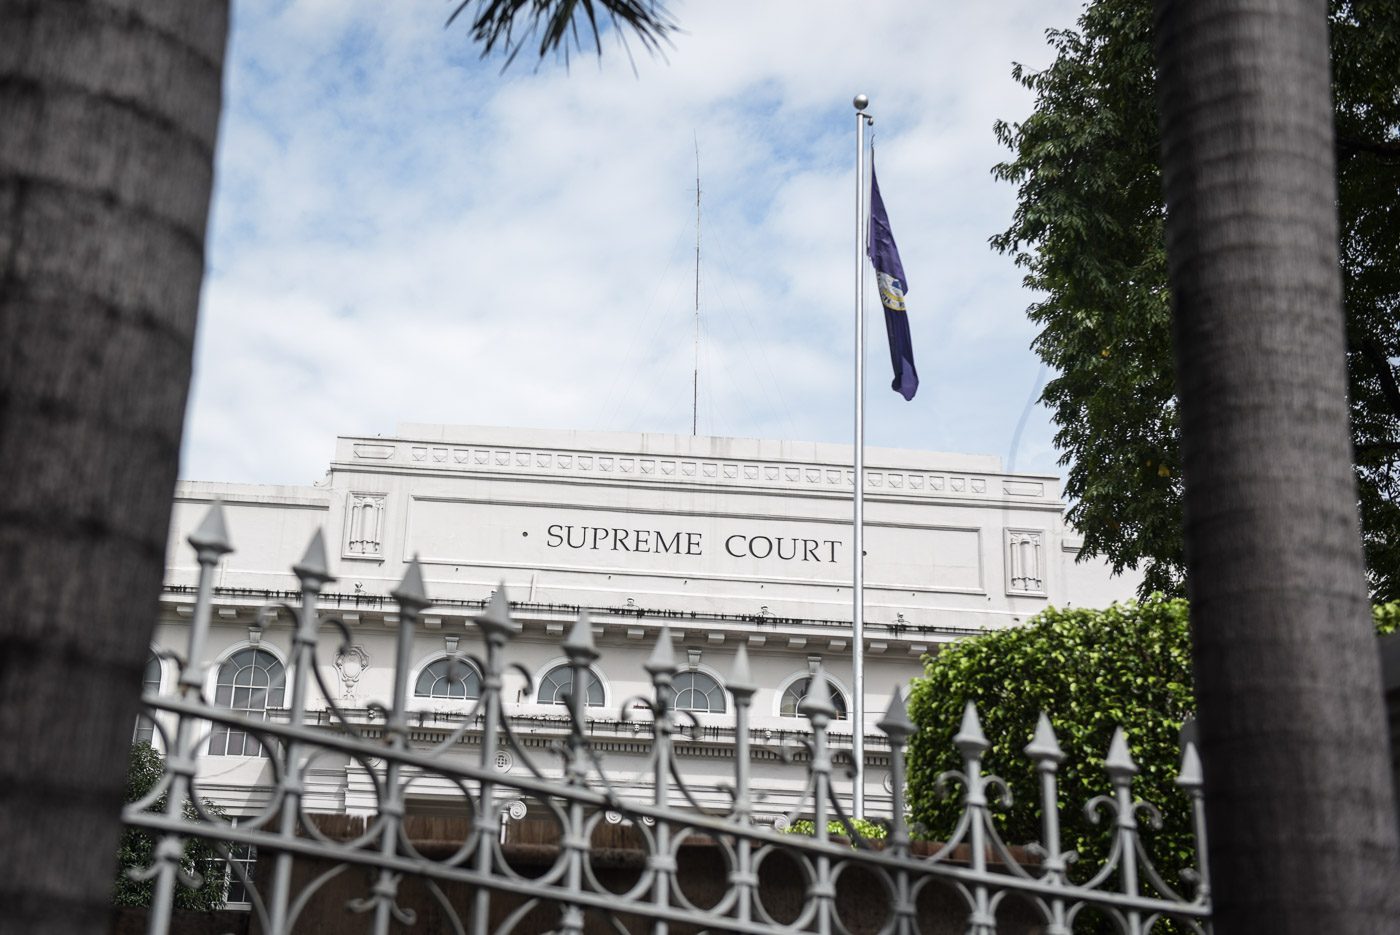 Governor Tan of Sulu runs to Supreme Court to block Bangsamoro law